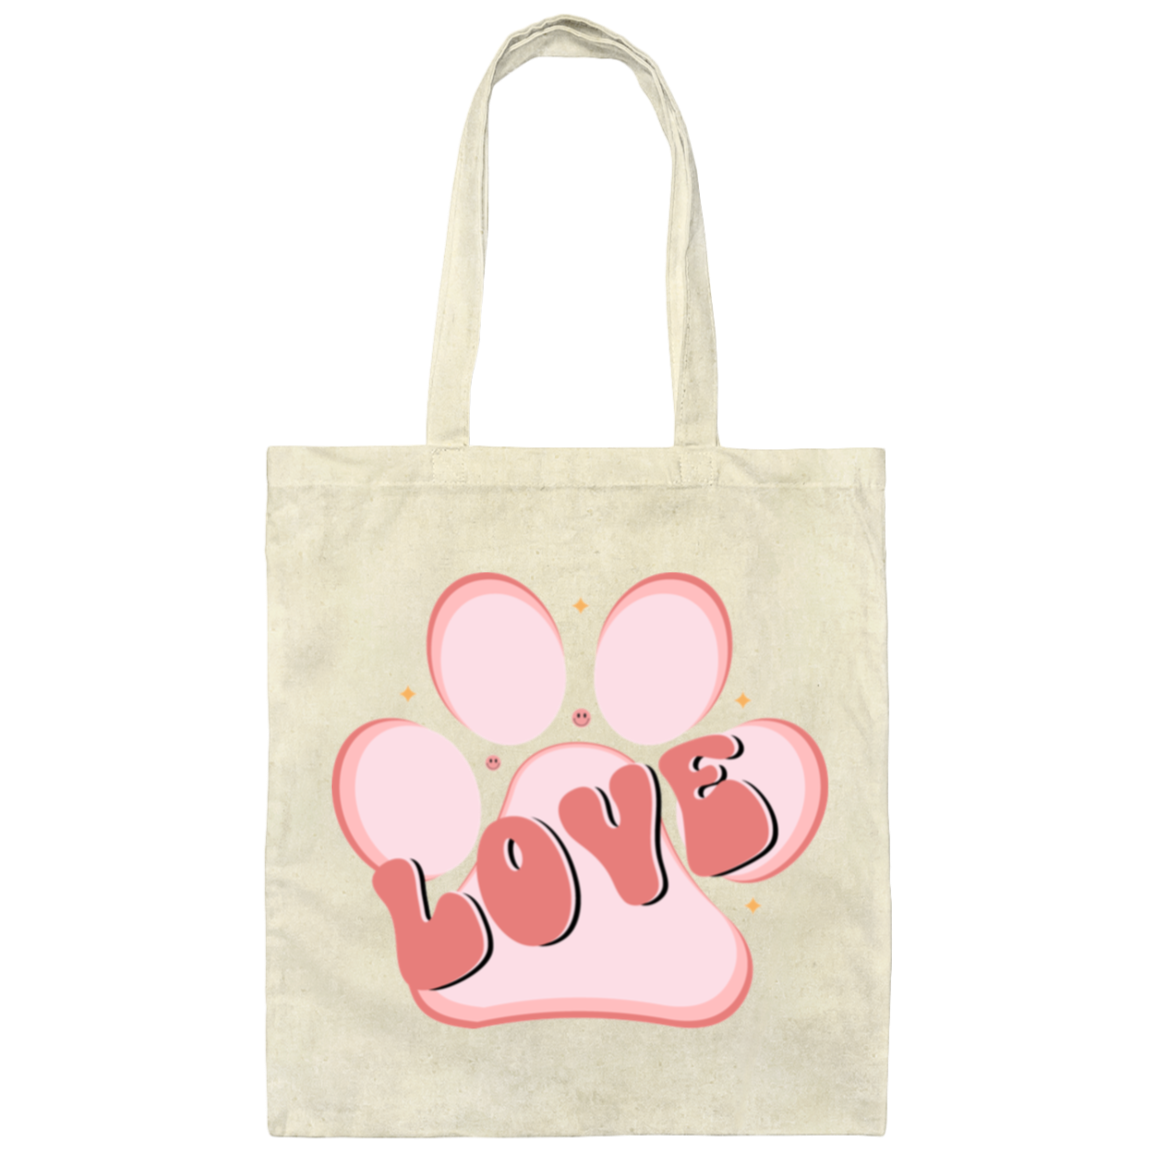 Love Paw Print Dog Rescue Canvas Tote Bag